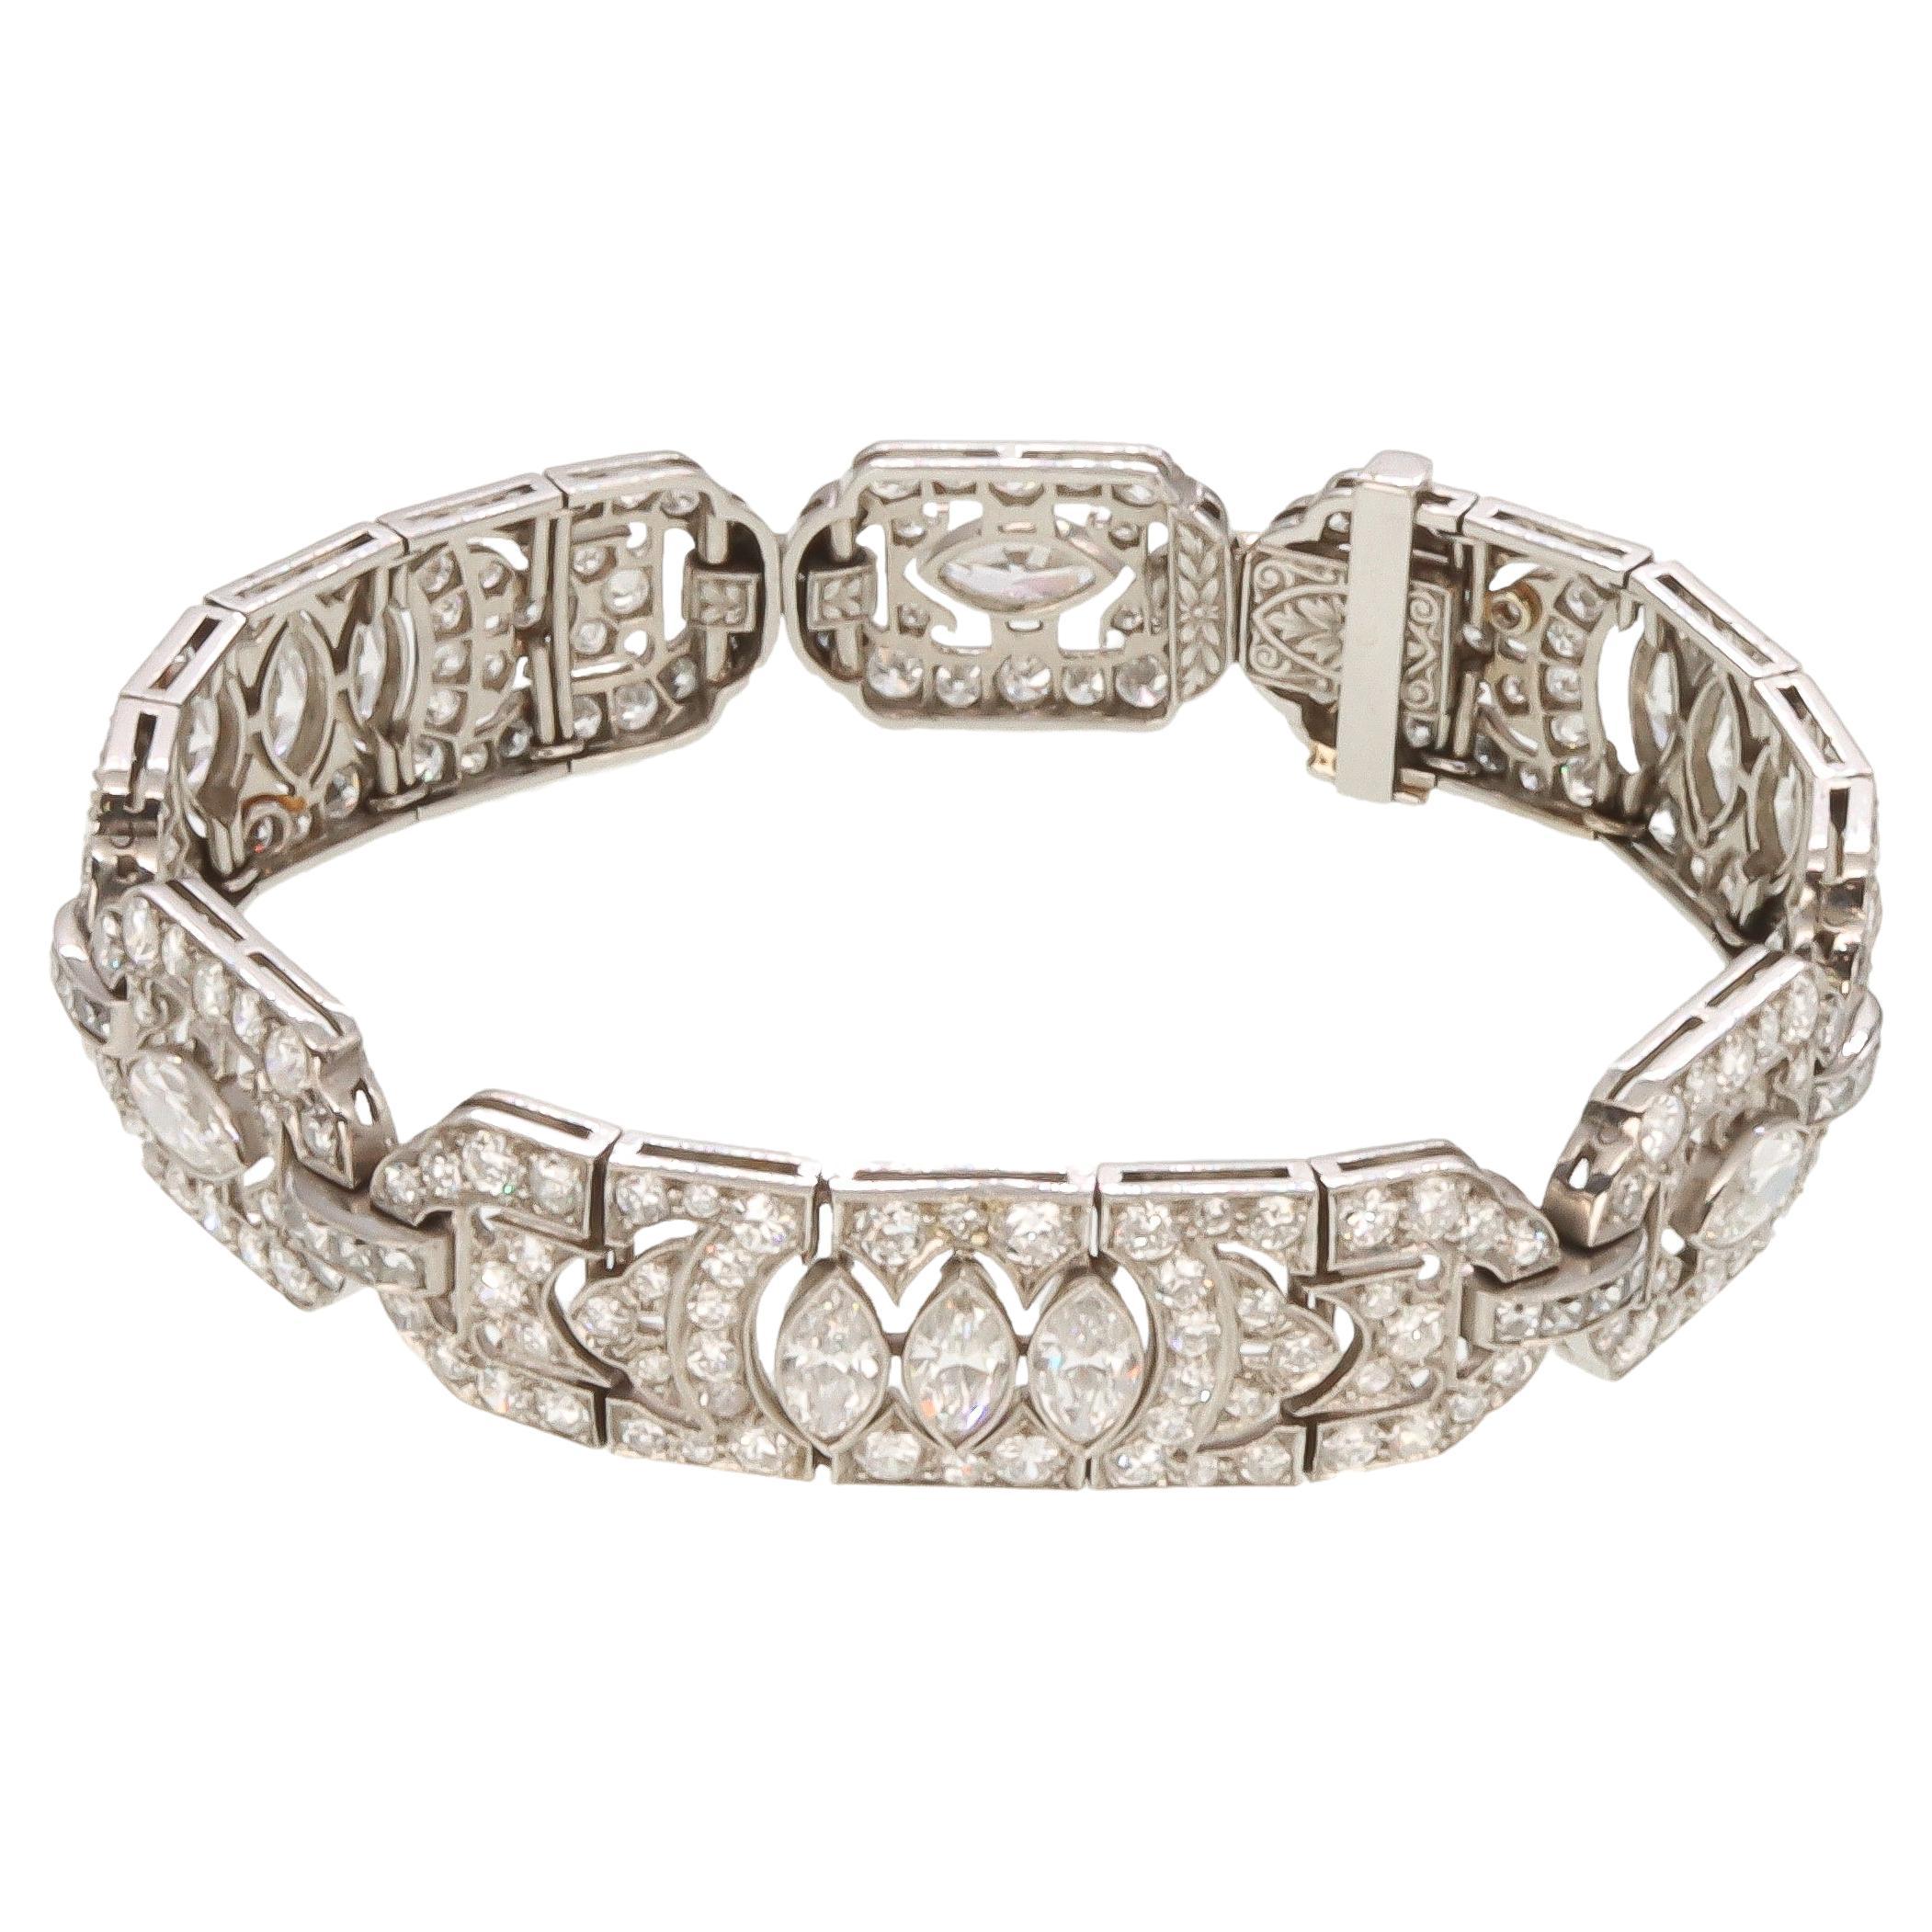 Tiffany & Co. Signed Art Deco Period 9 Carat Diamond and Platinum Bracelet